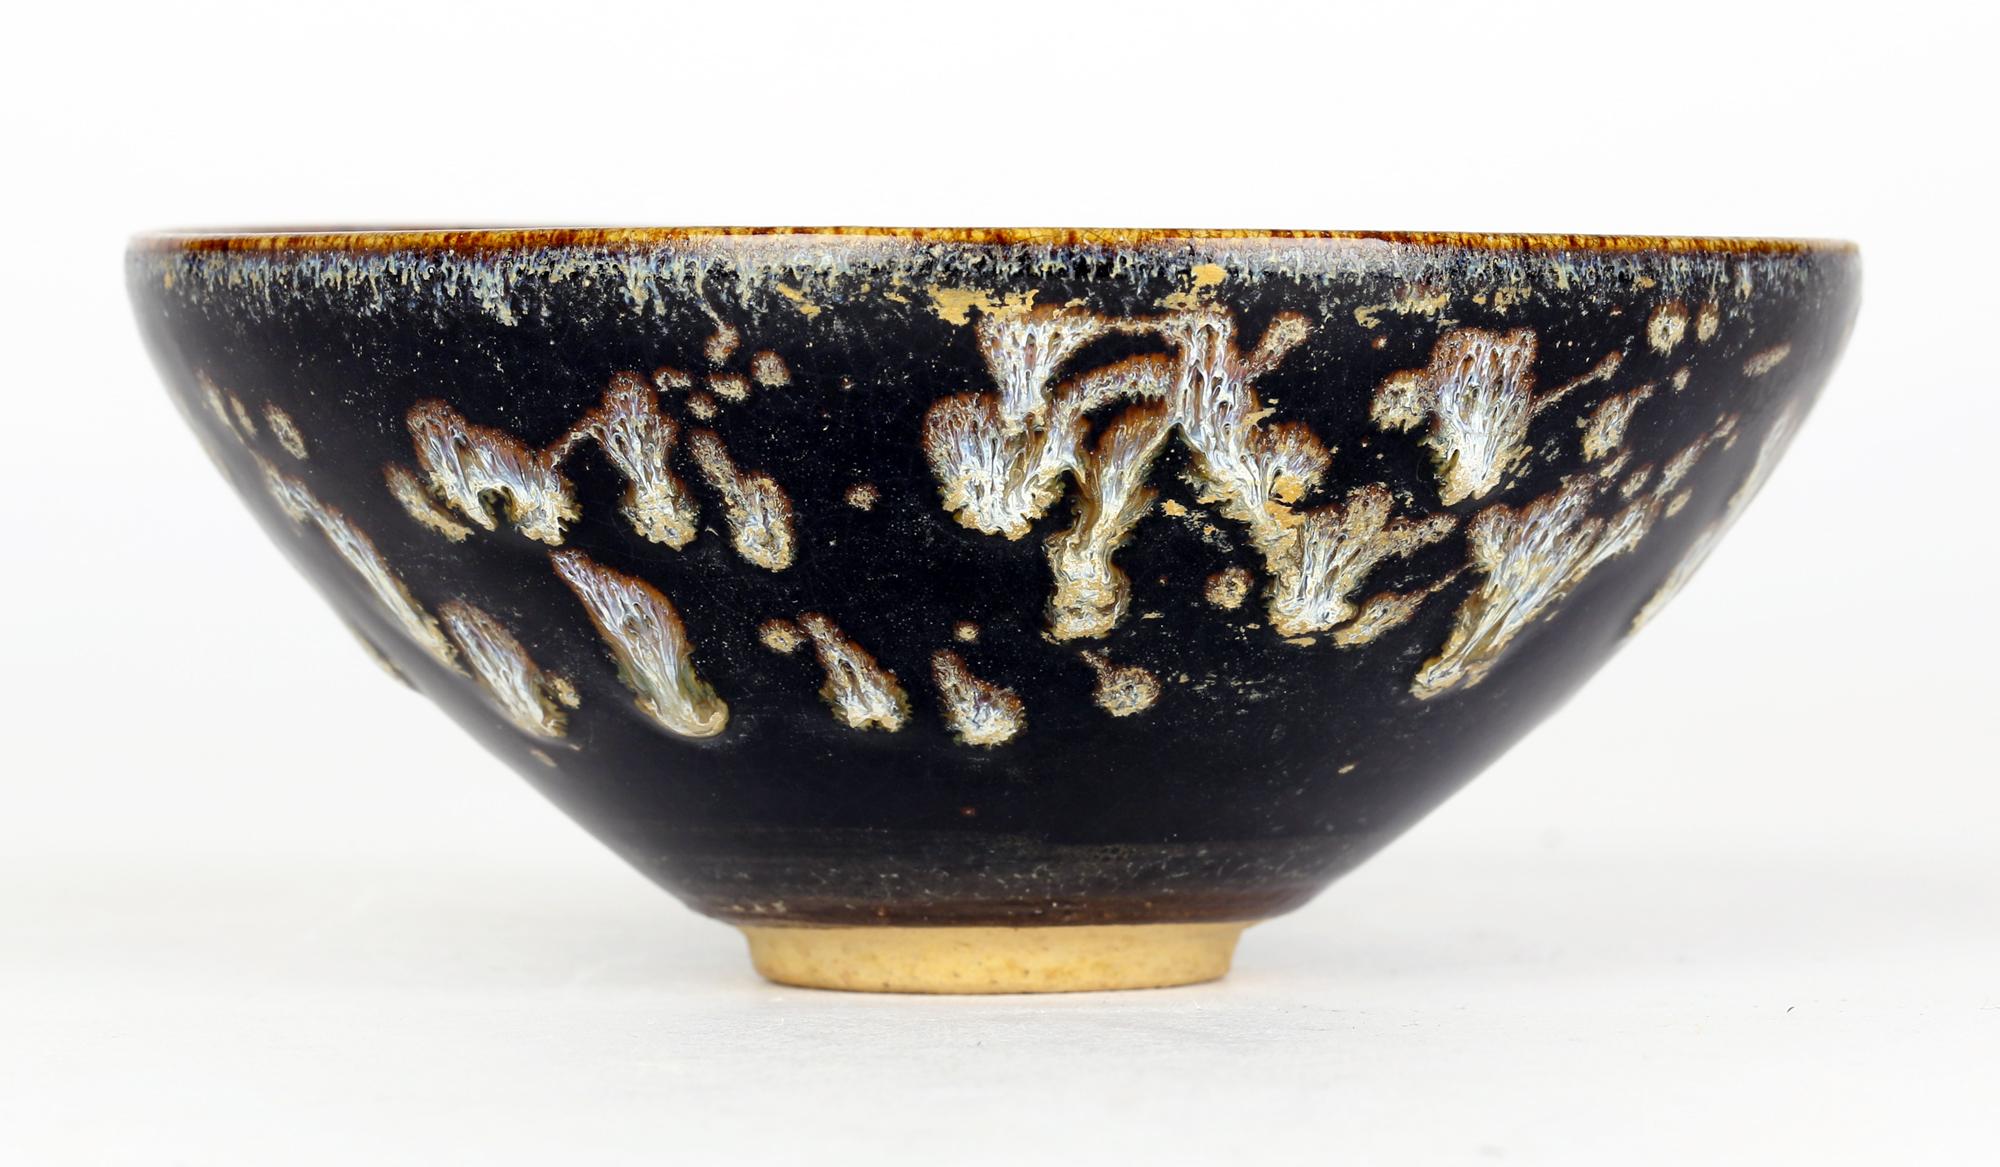 20th Century Chinese Jian Ware Style Glazed Pottery Teabowl with Ho Ho Birds